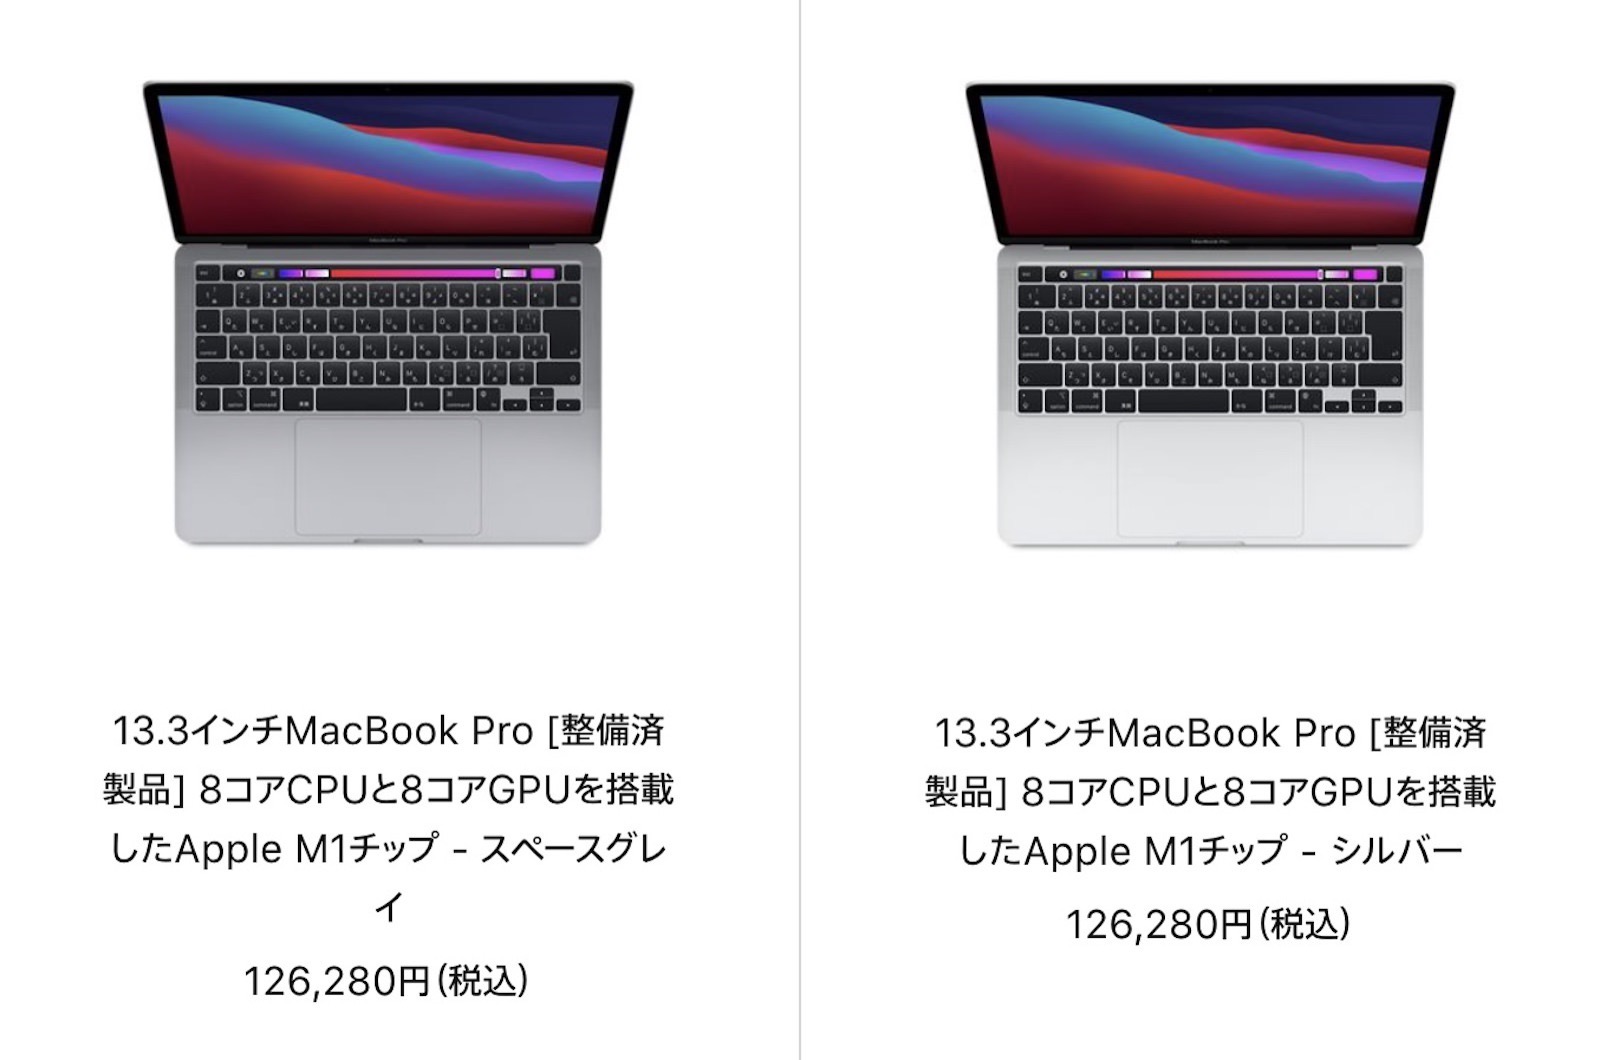 Macbook pro m1 refurbished models